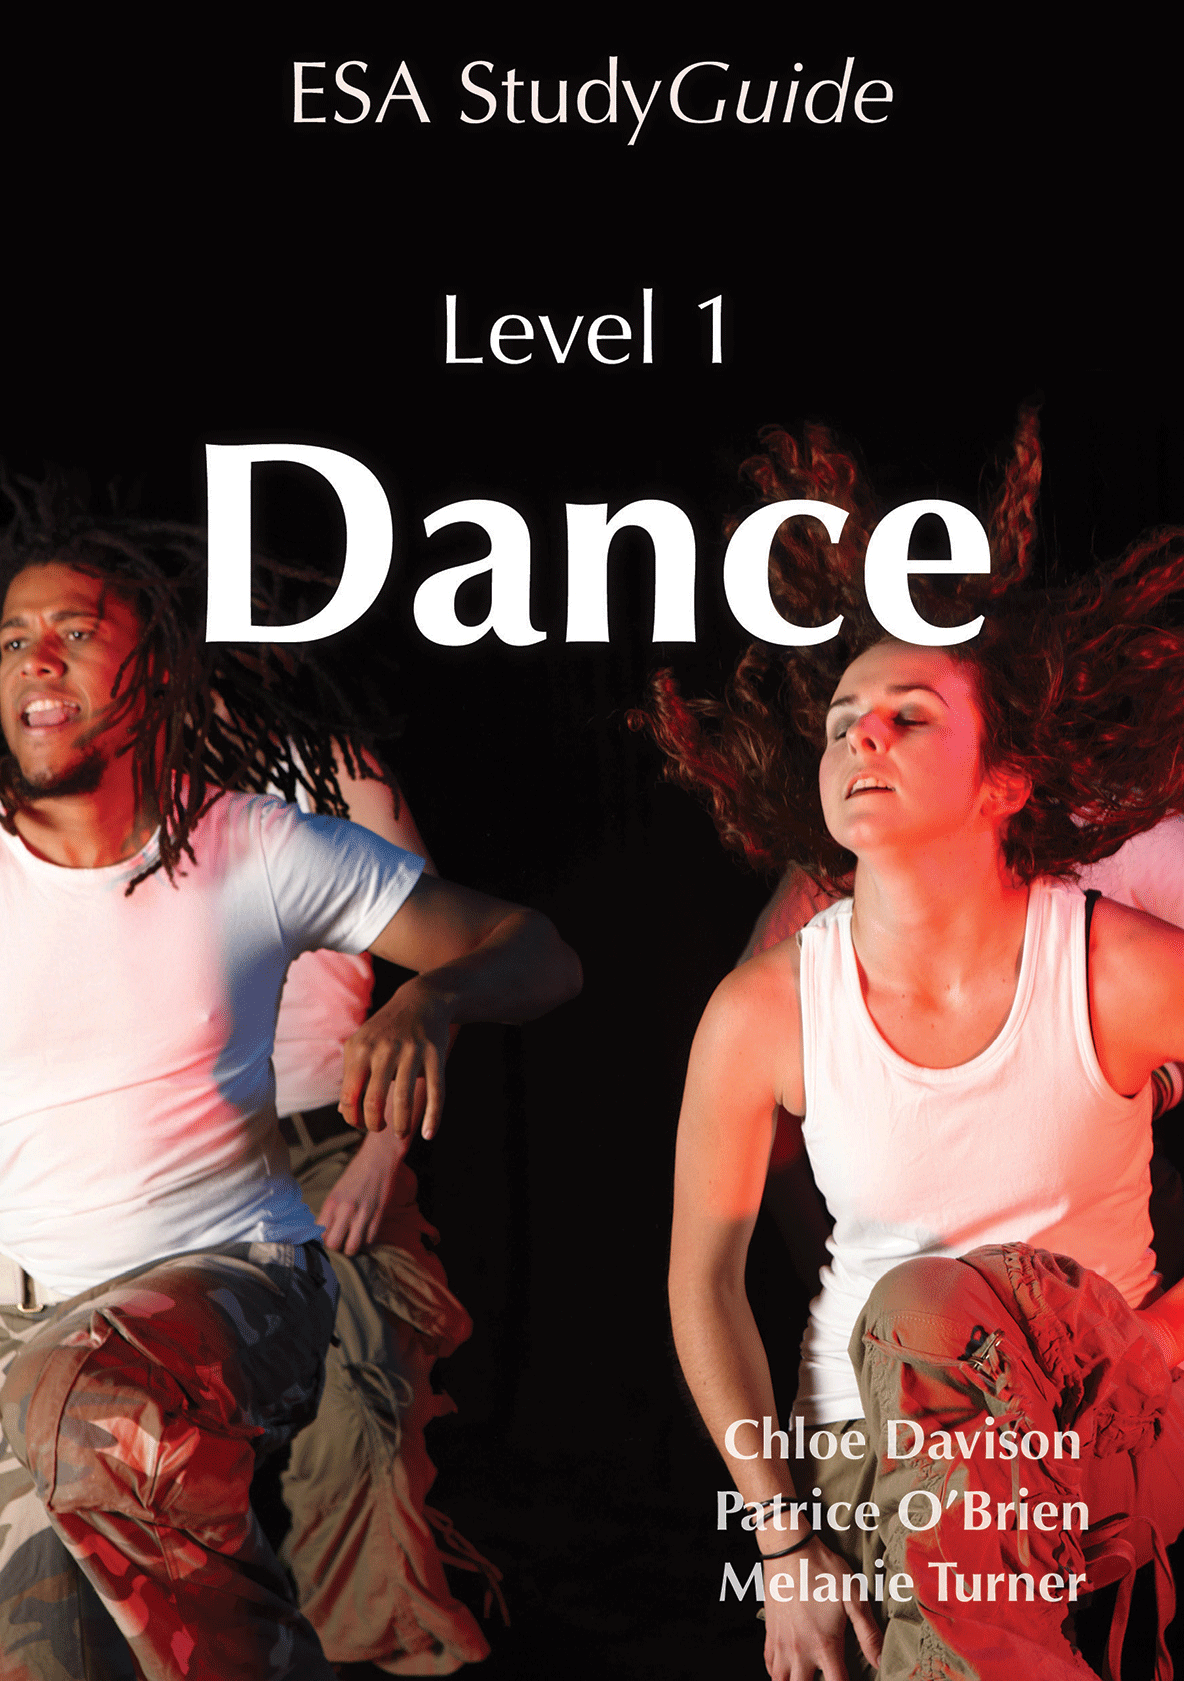 Level 1 Dance ESA Study Guide